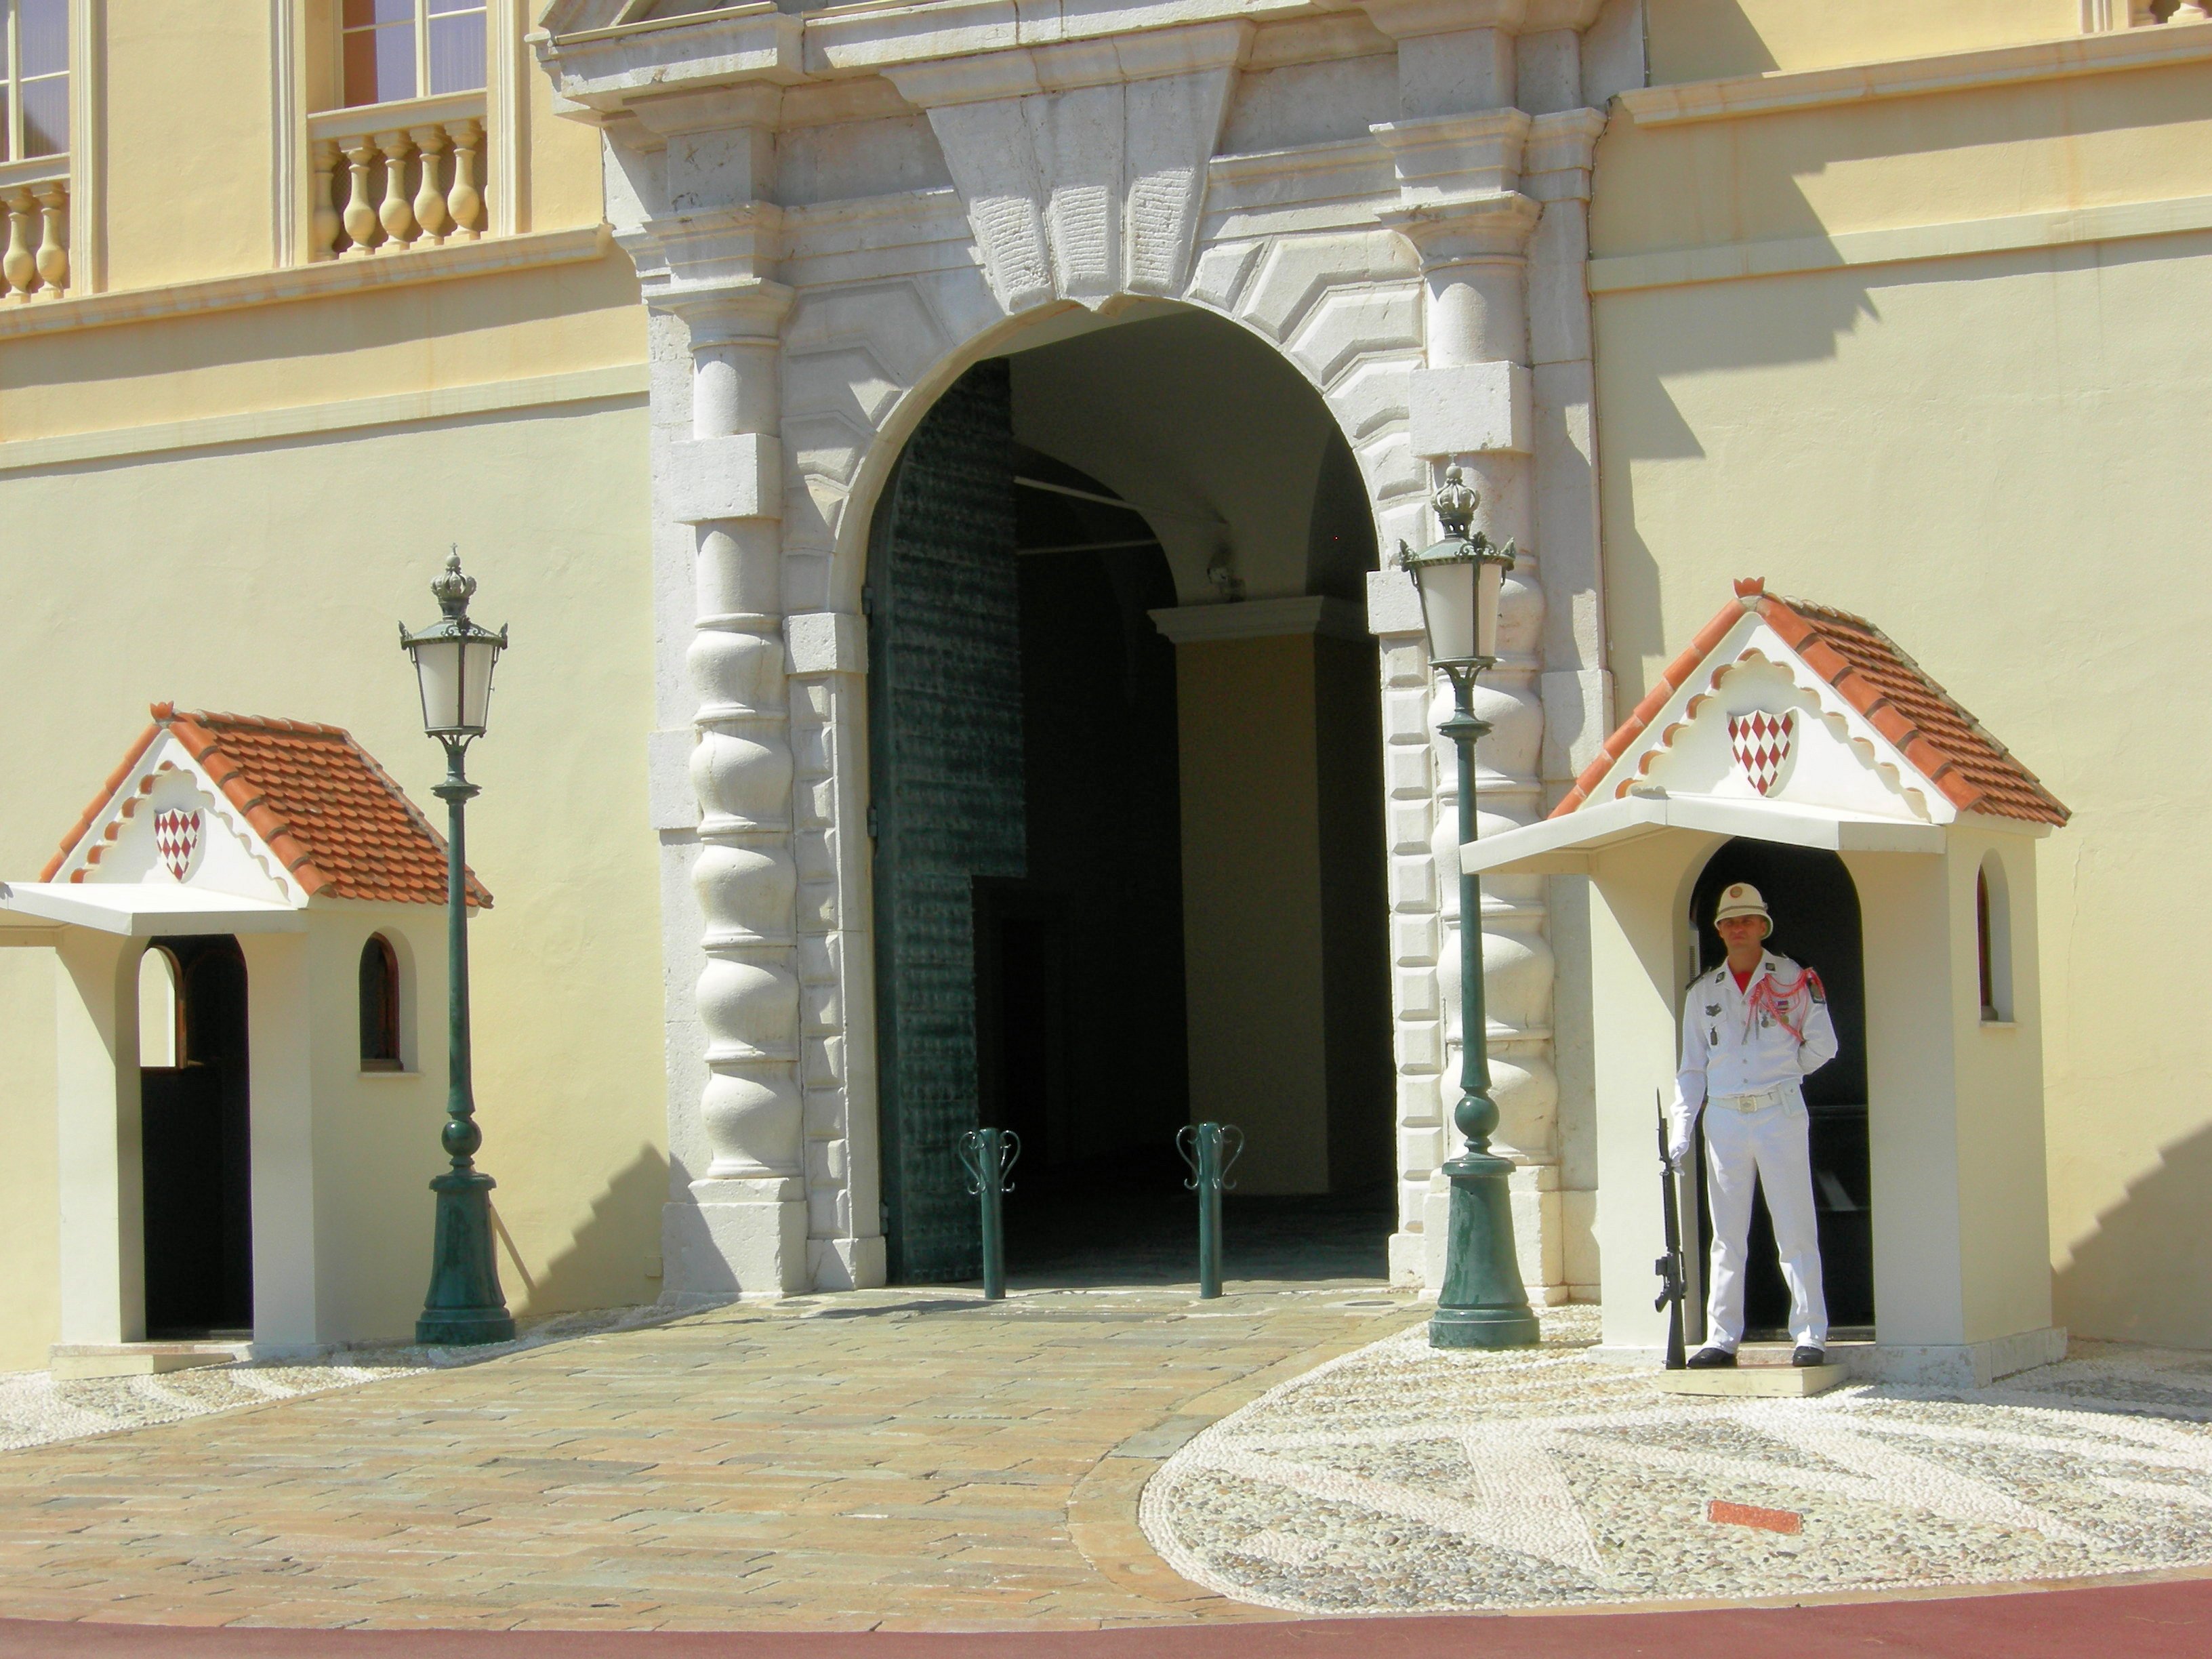 Prince's palace of monaco. guarded photo